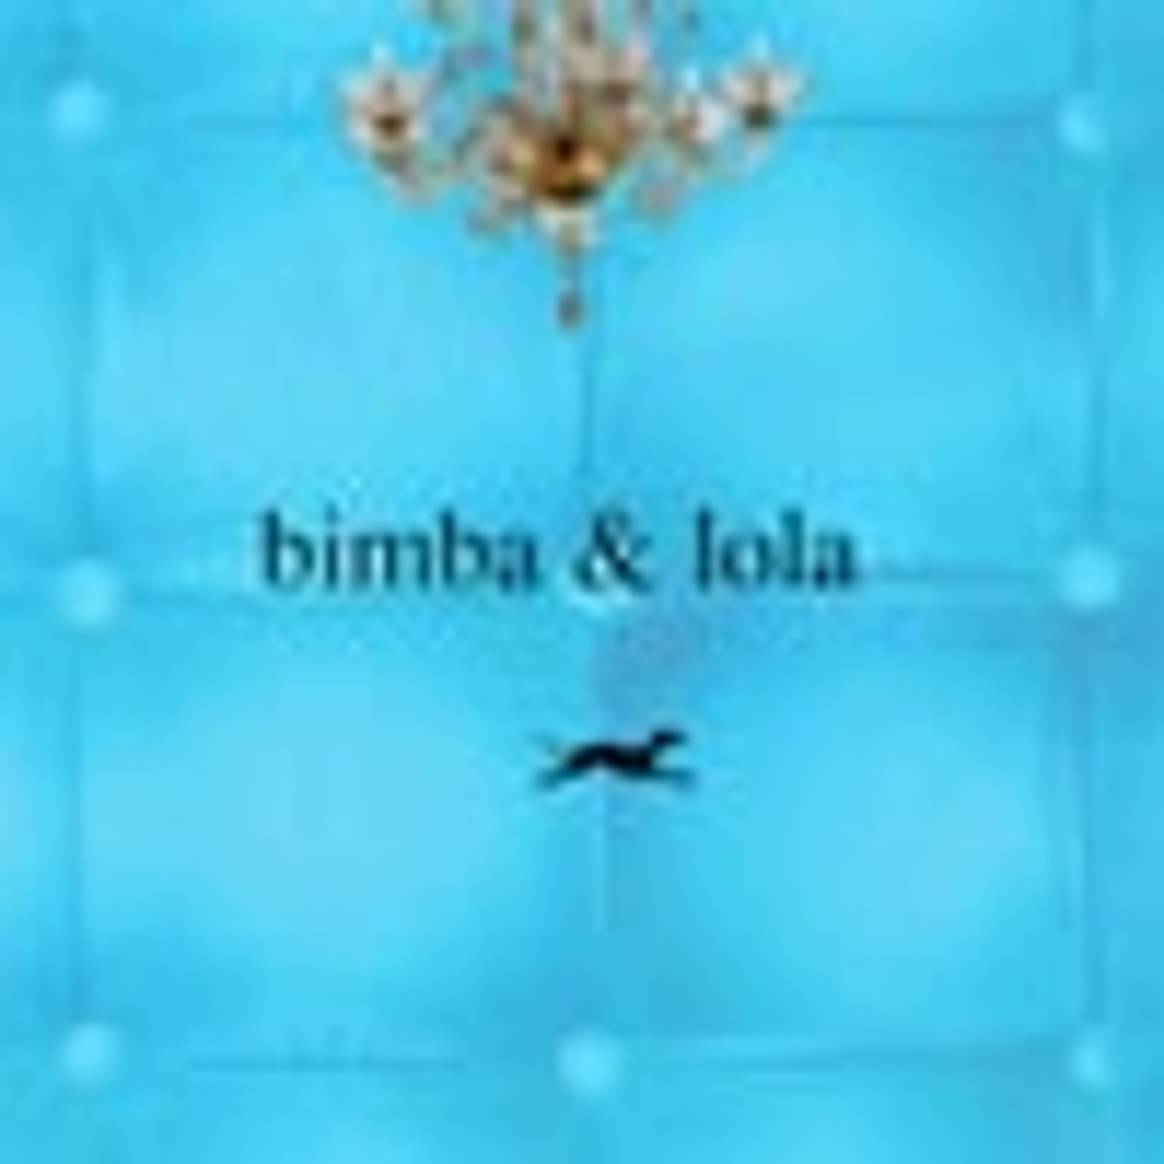 Bimba & Lola una web de moda